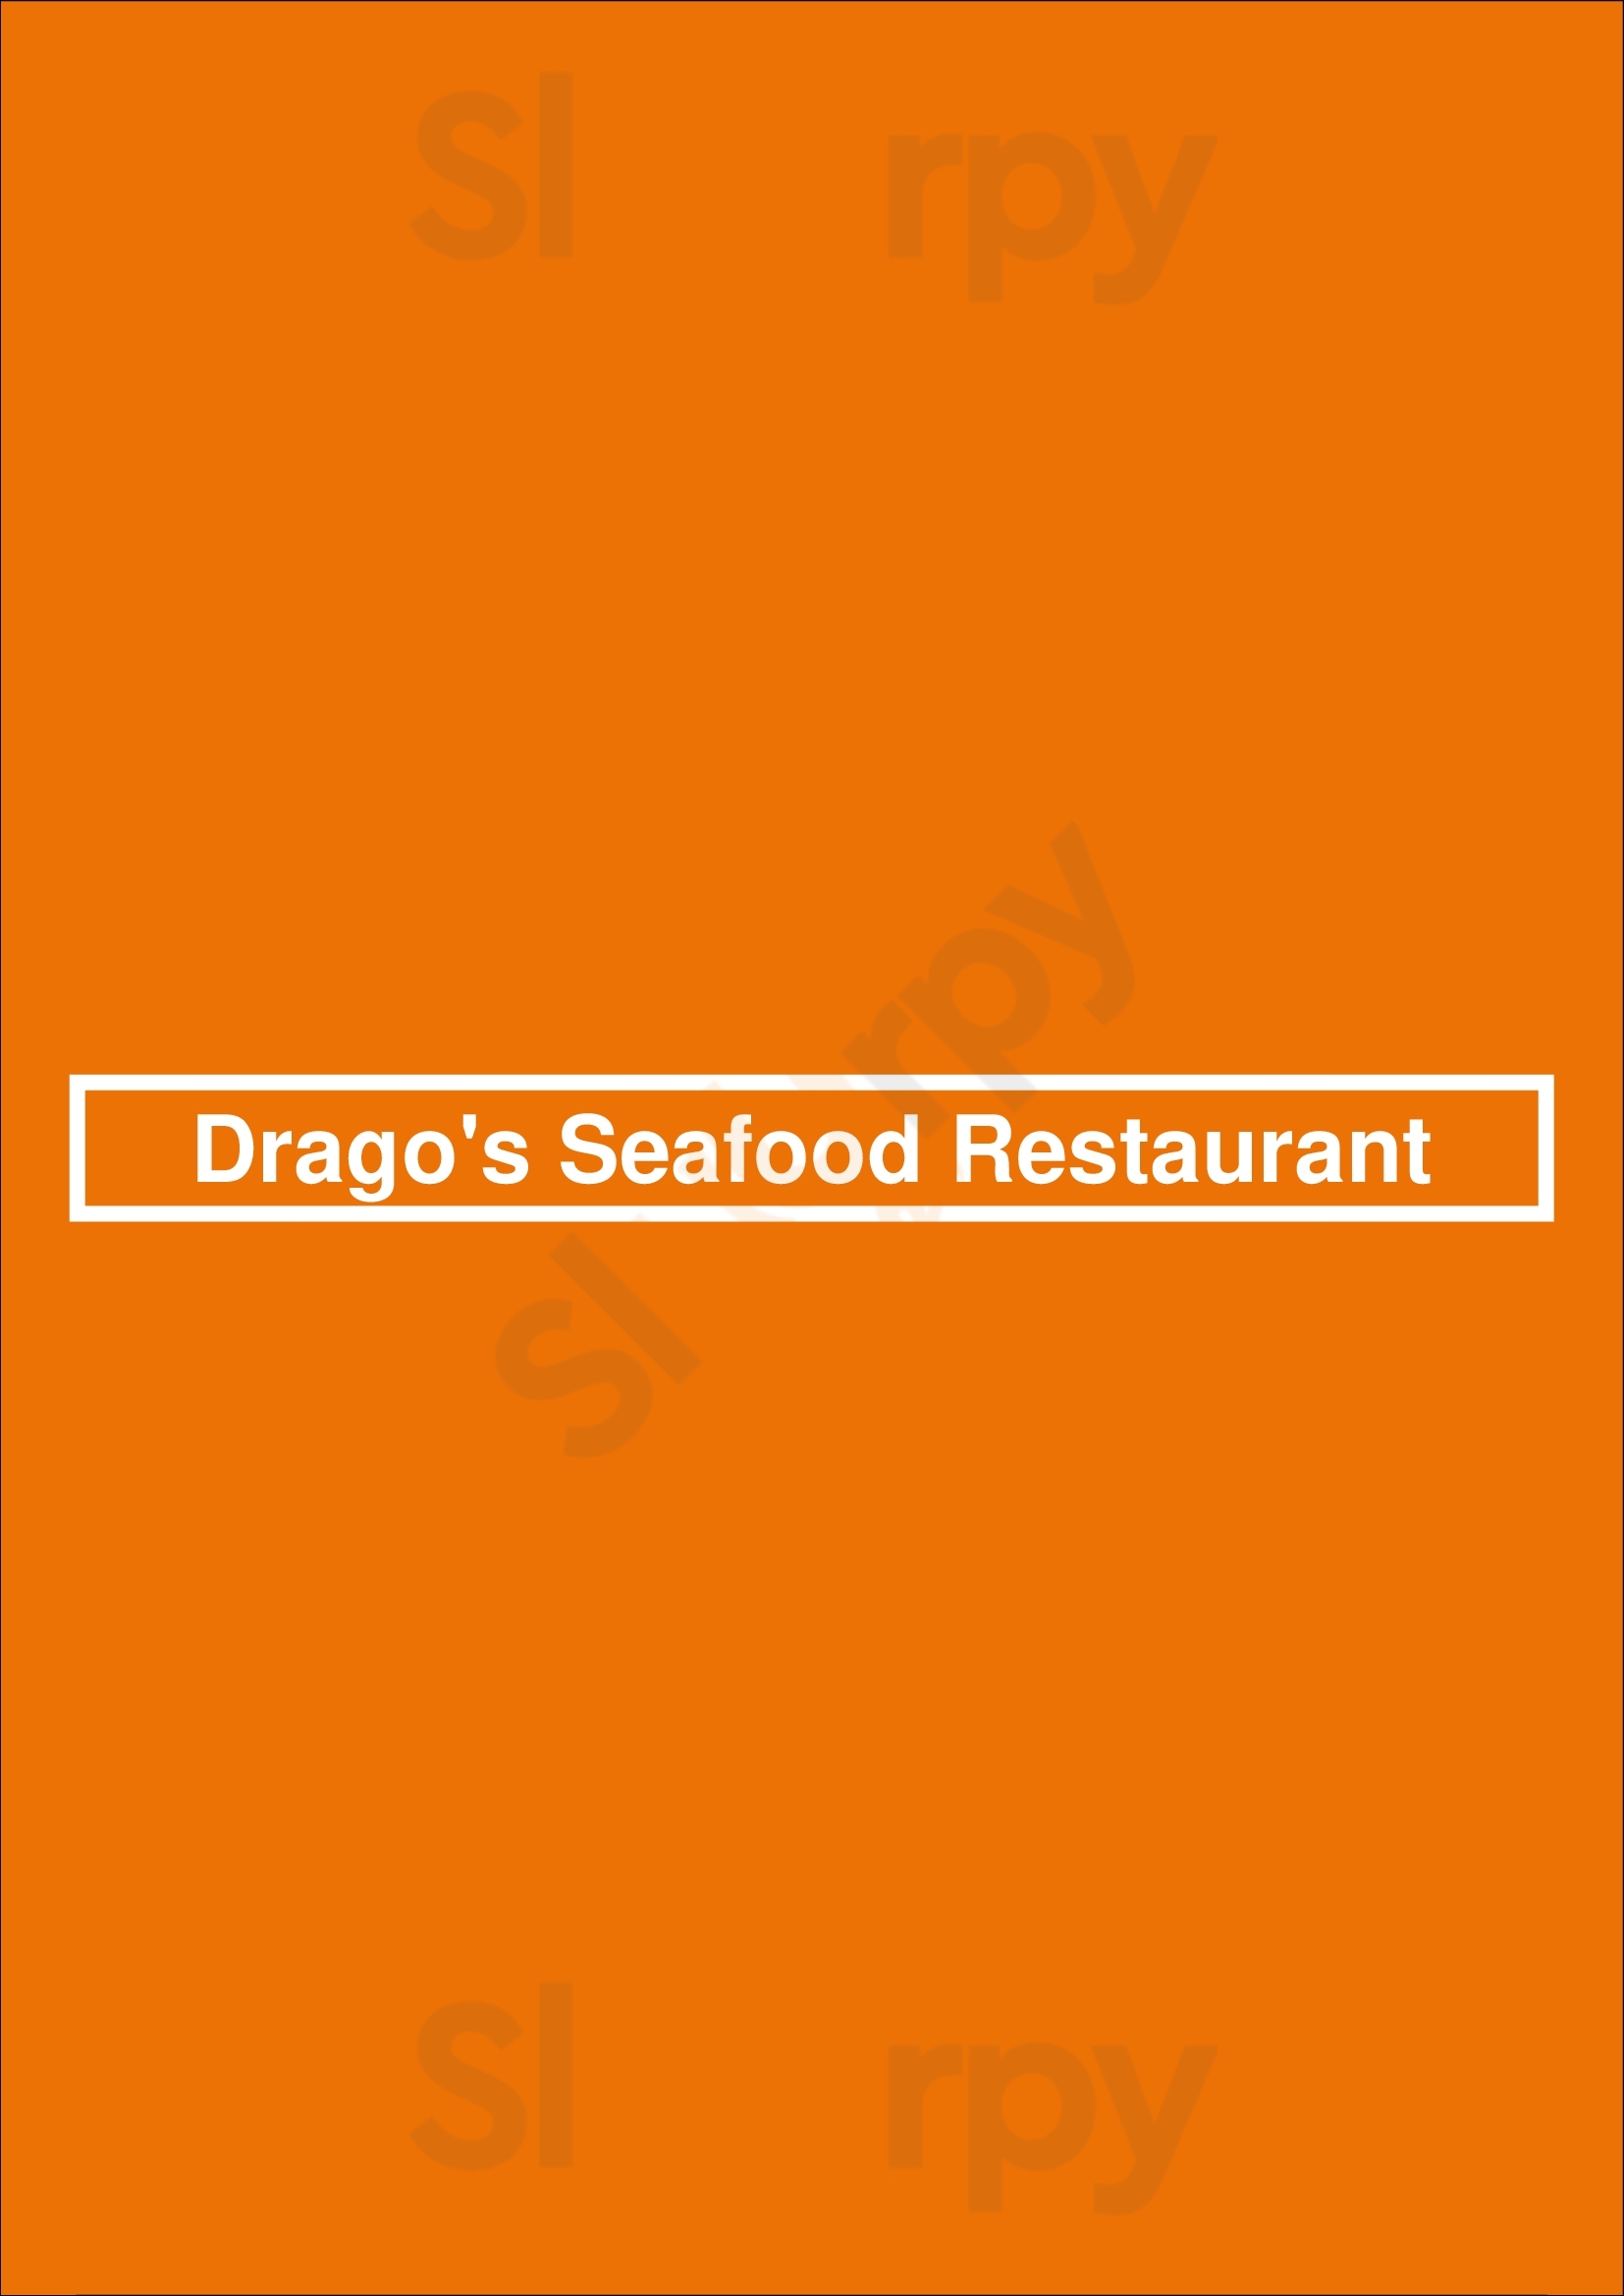 Drago's Seafood Restaurant New Orleans Menu - 1